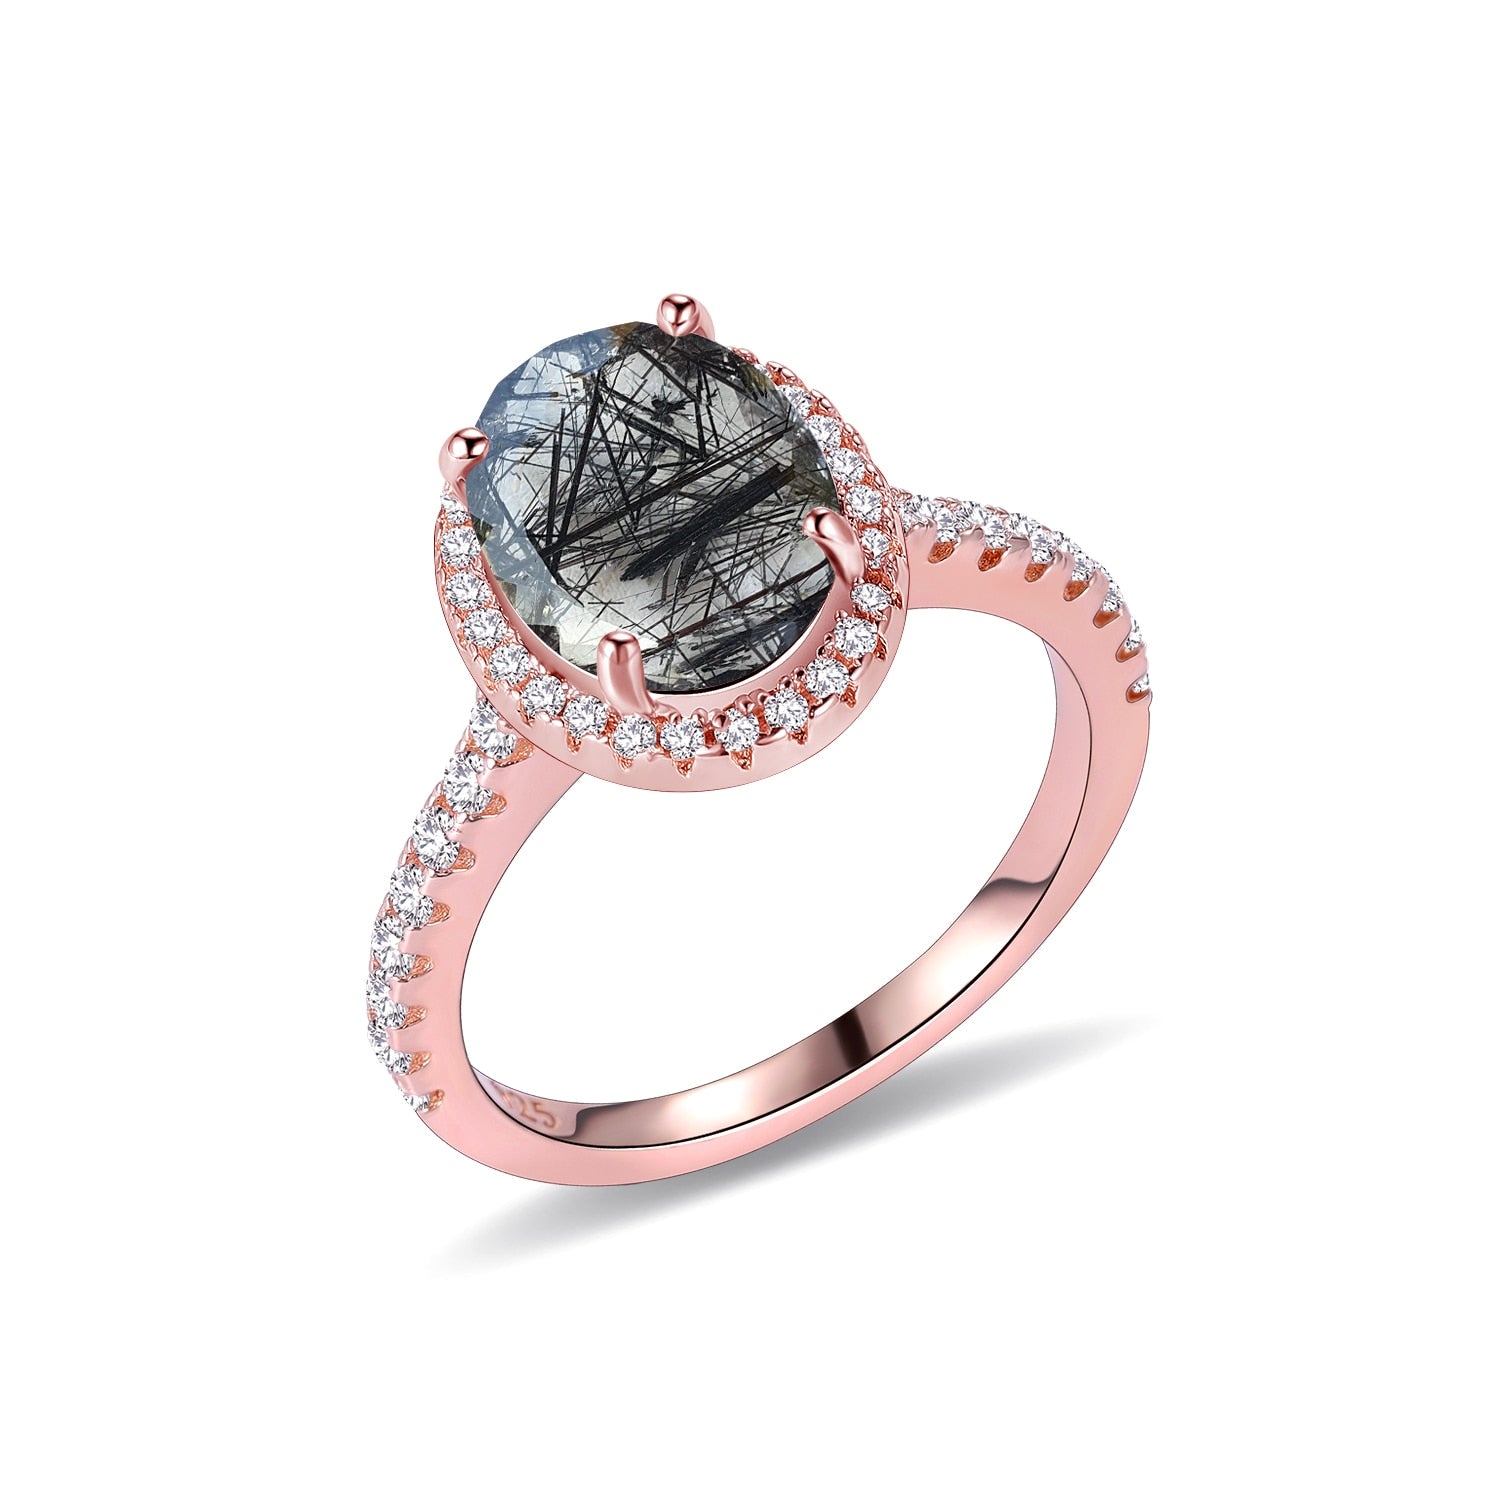 GEM'S BALLET 6X8mm Oval Natural Black Rutilated Quartz Gemstone Wedding Engagement Ring in 925 Sterling Silver Gift For Her Rutilated Quartz - R|6X8mm